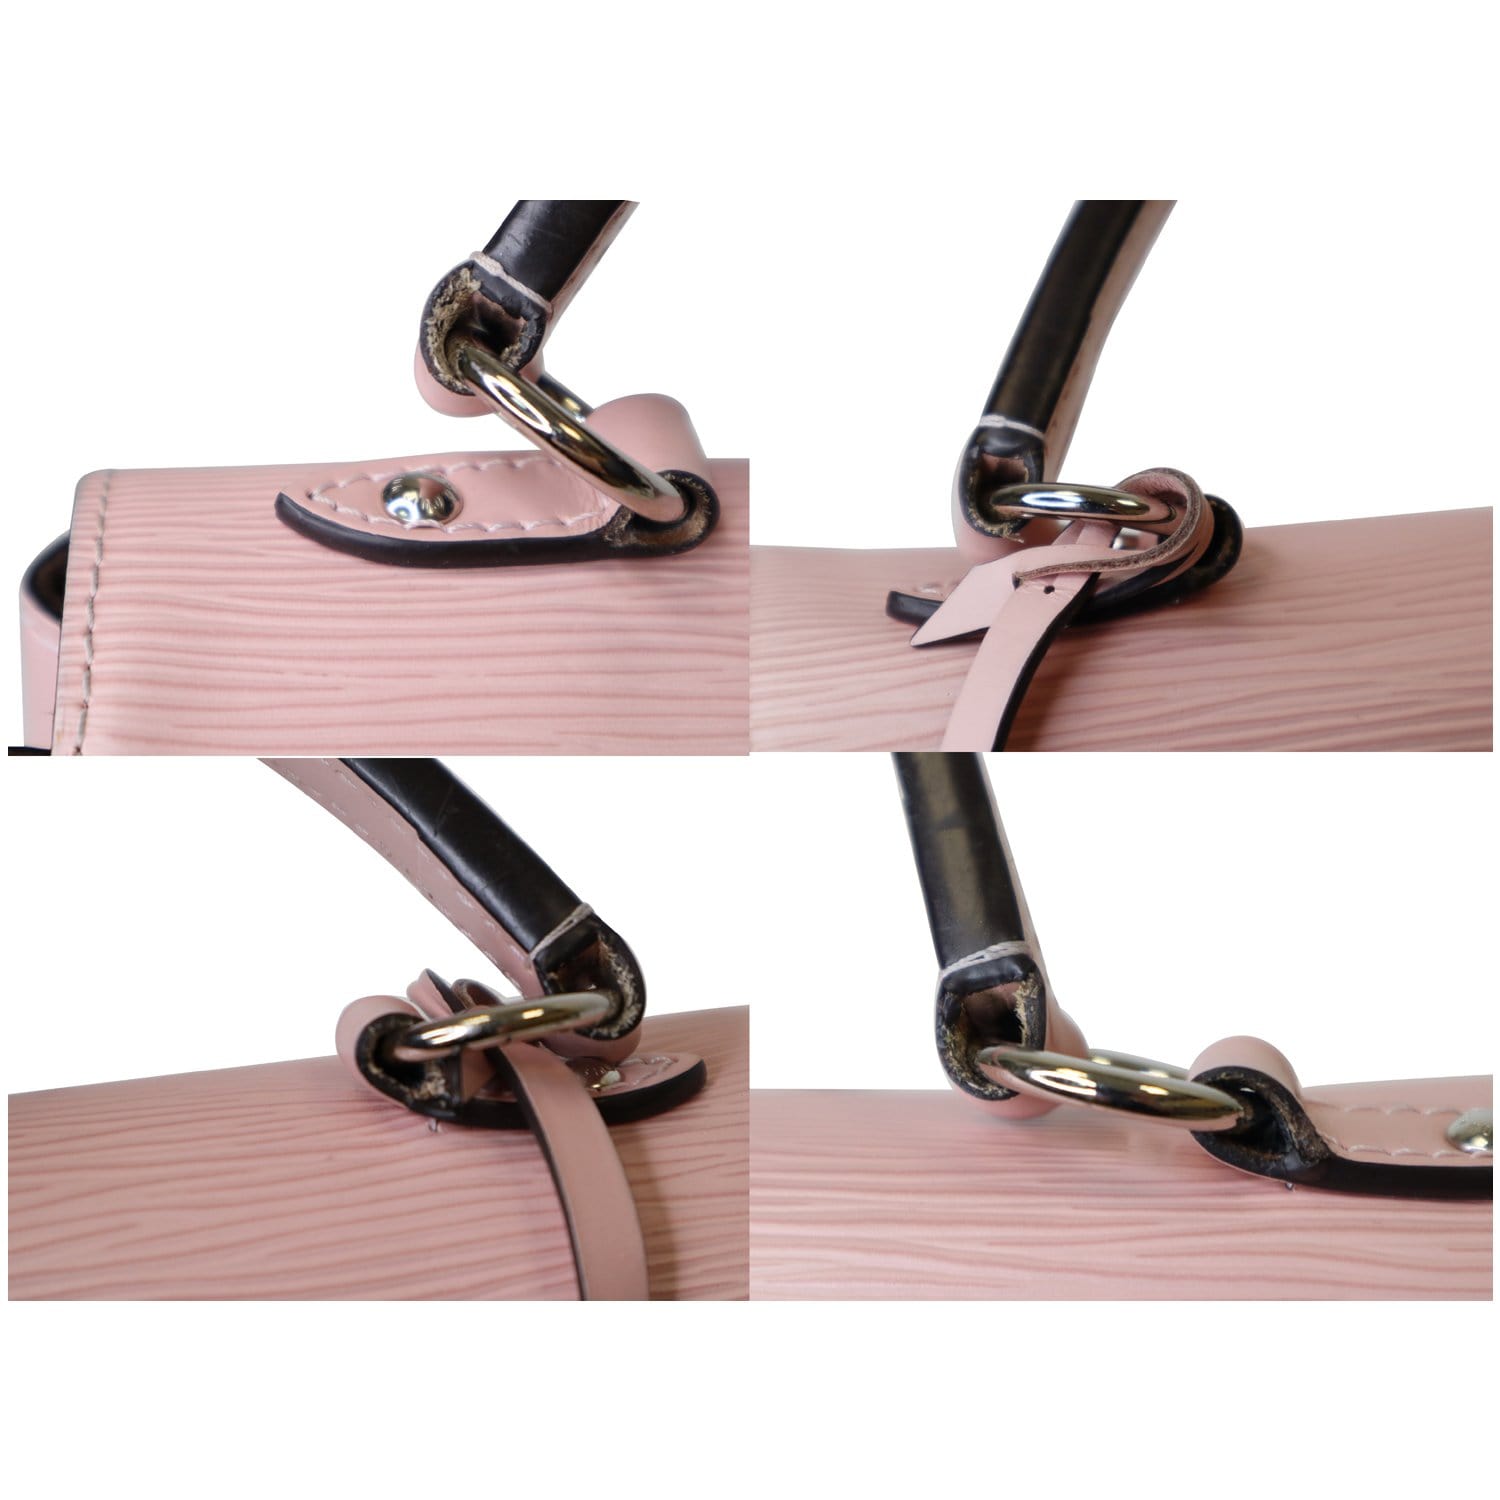 Louis Vuitton Cluny MM Epi (pink)